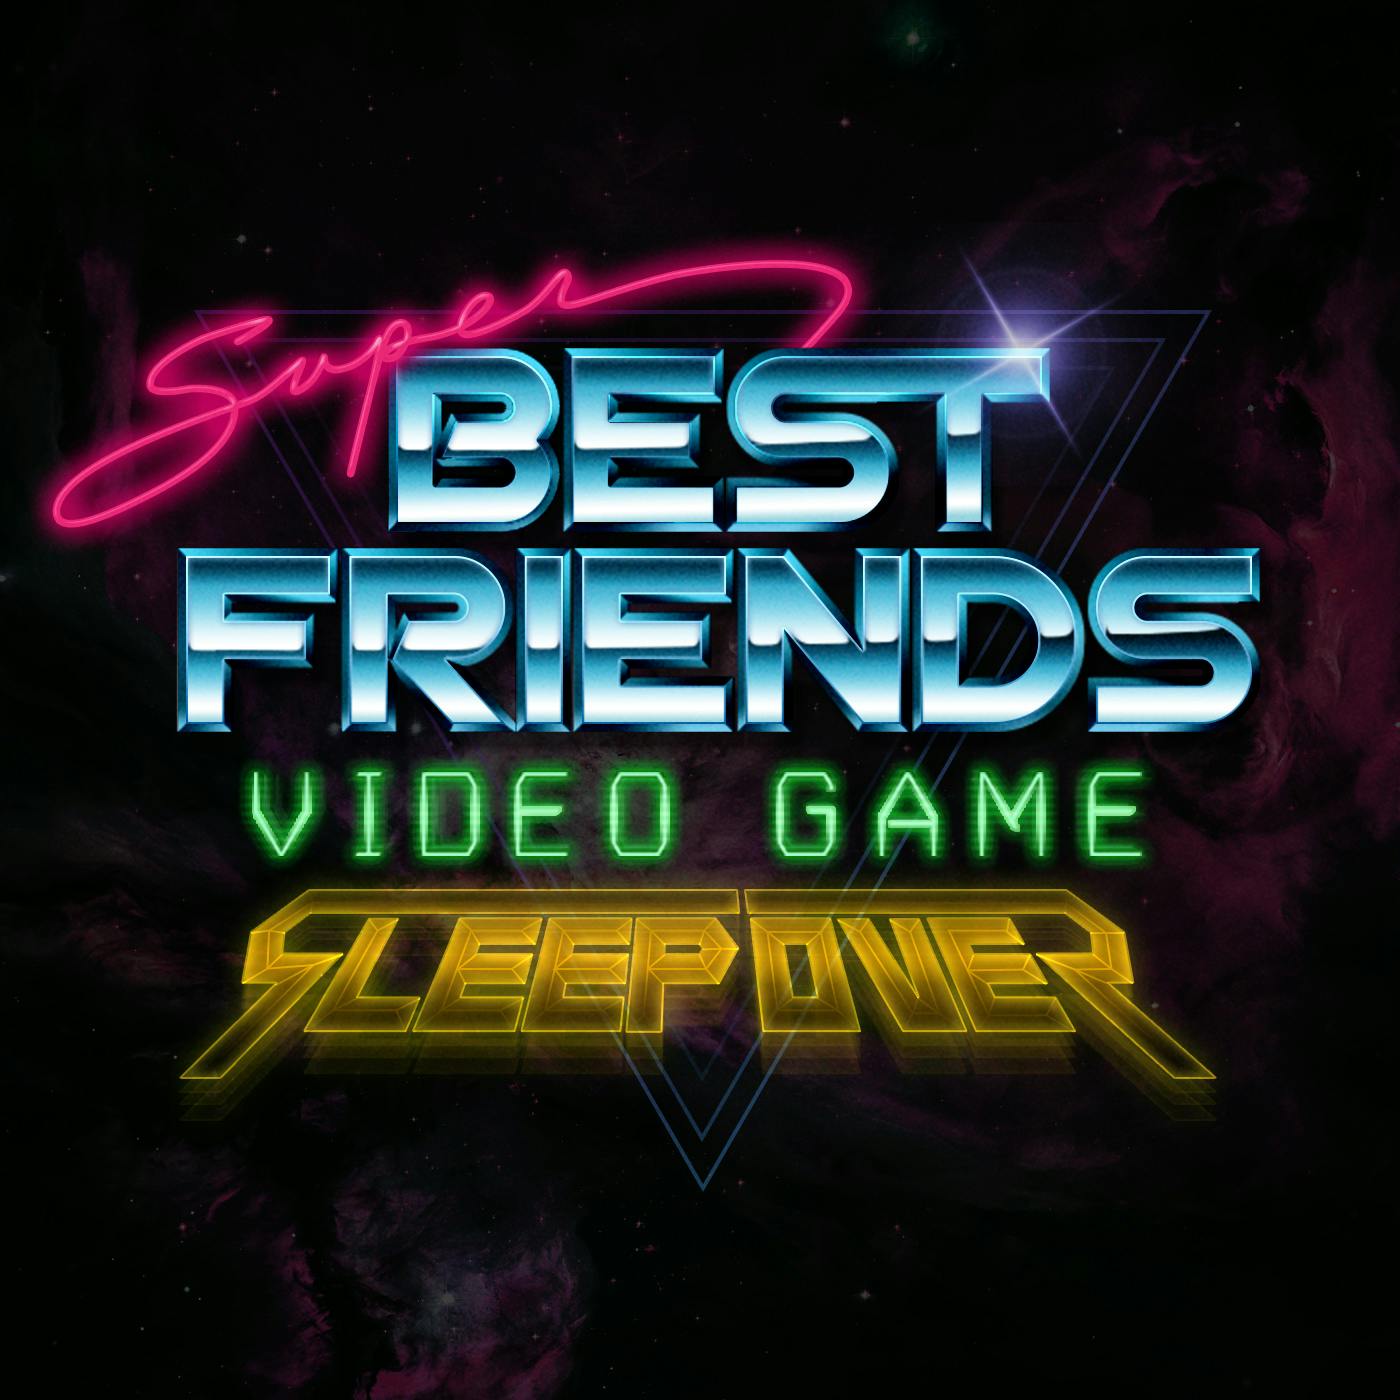 Super Best Friends Video Game Sleepover - Episode 42